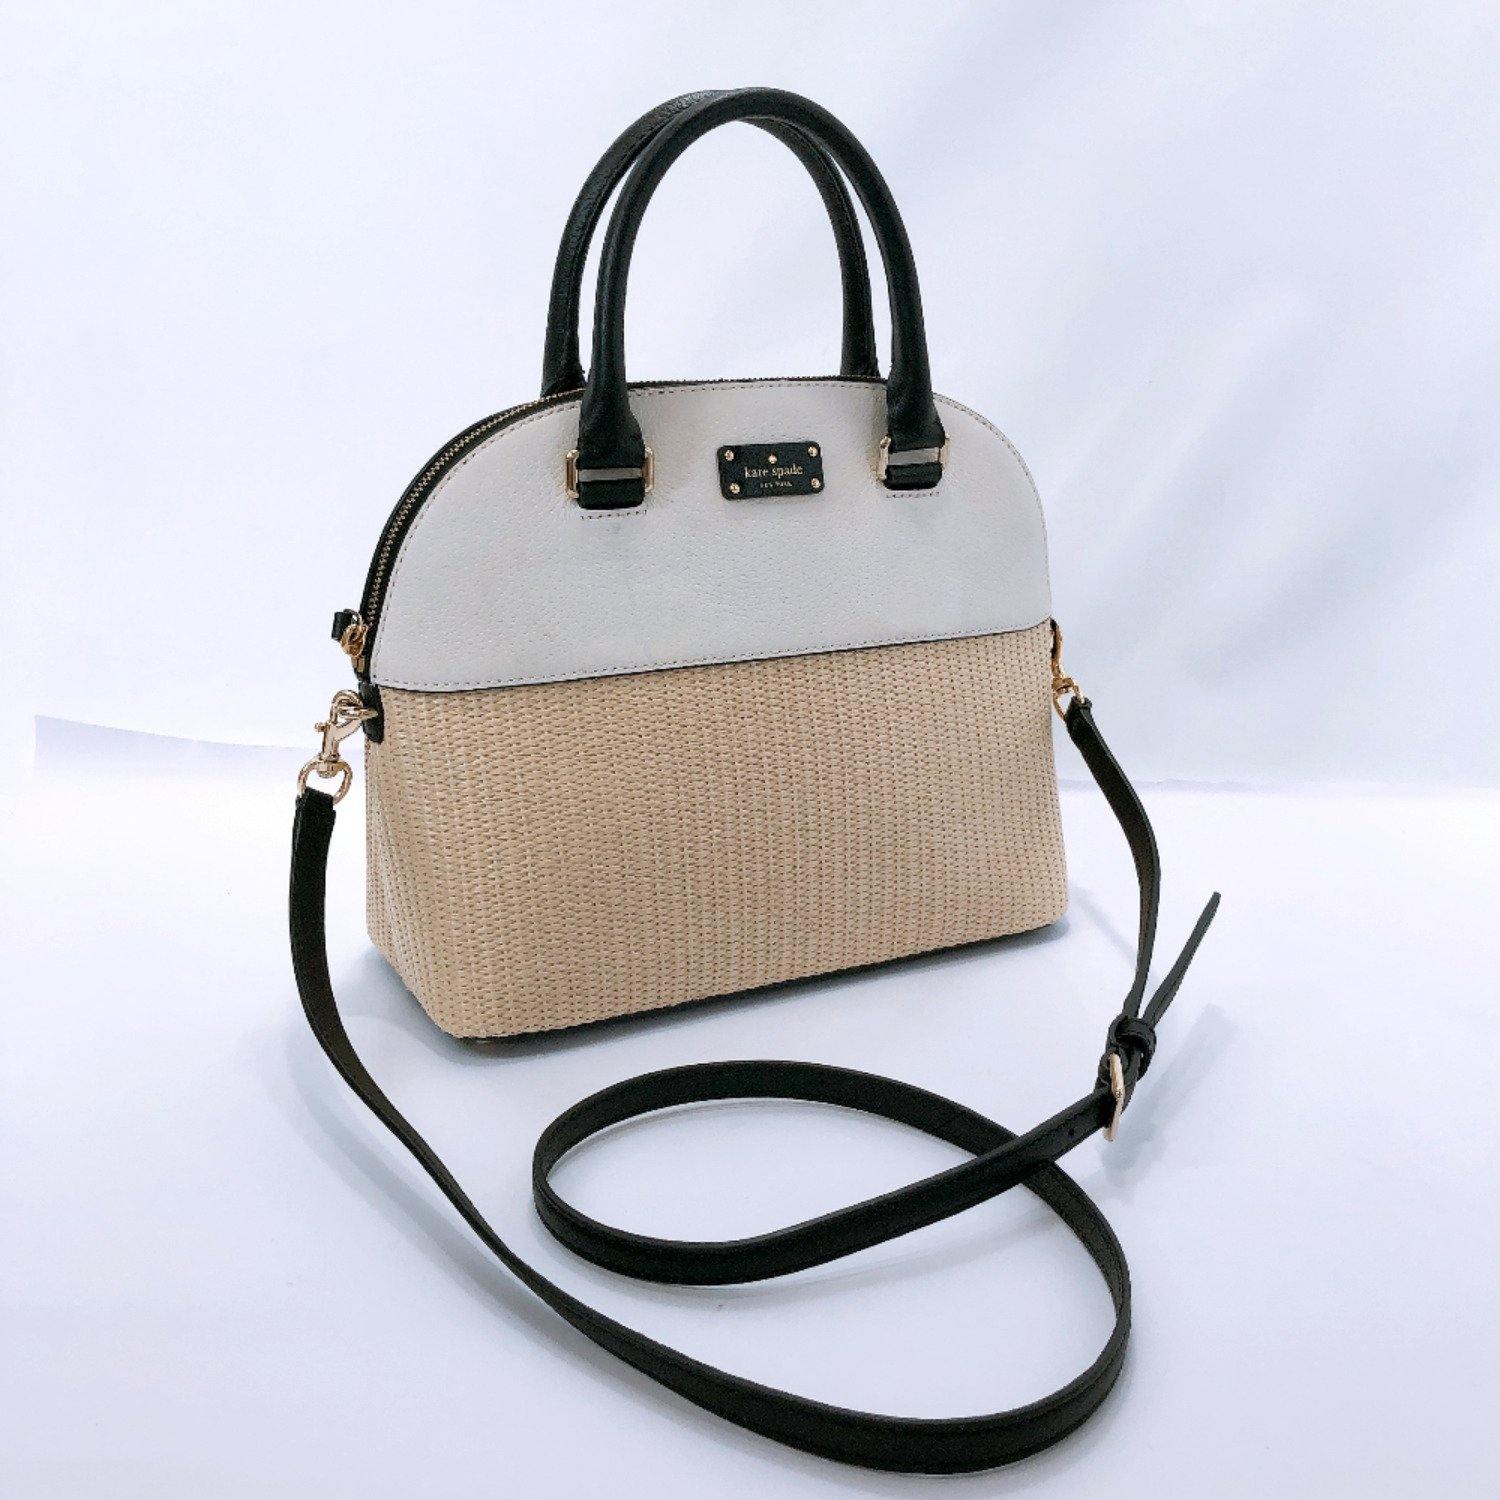 Kate Spade Handbag WKRU5476 Grove street 2way leather/straw